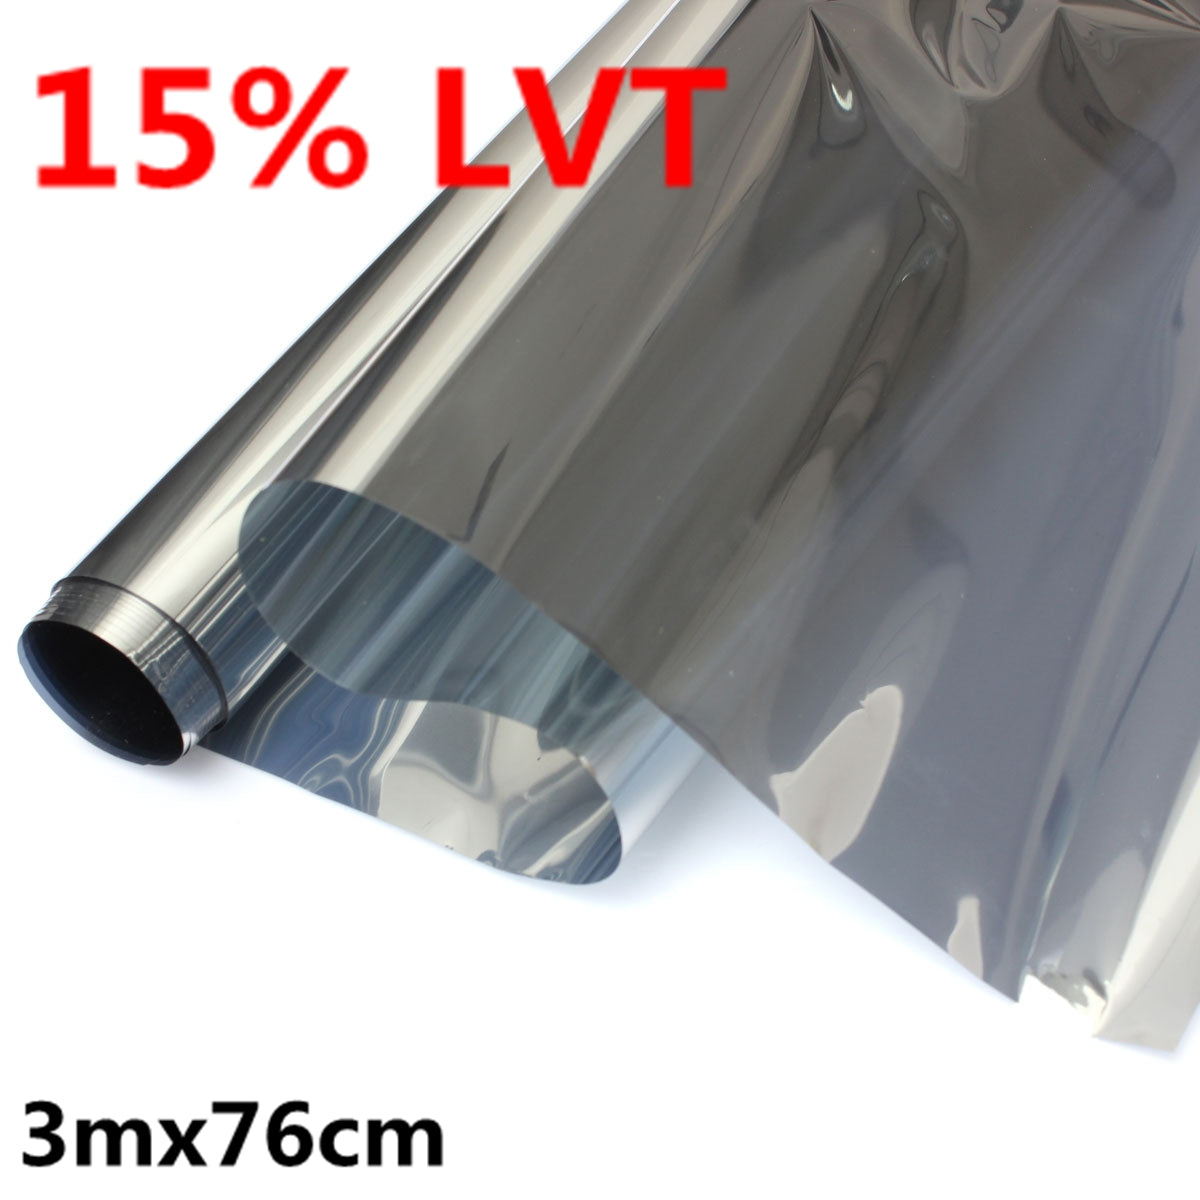 Dim Gray 15% 30% 3mx76cm LVT Car Auto Window Glass Tint Film Tinting Roll Silver Mirror